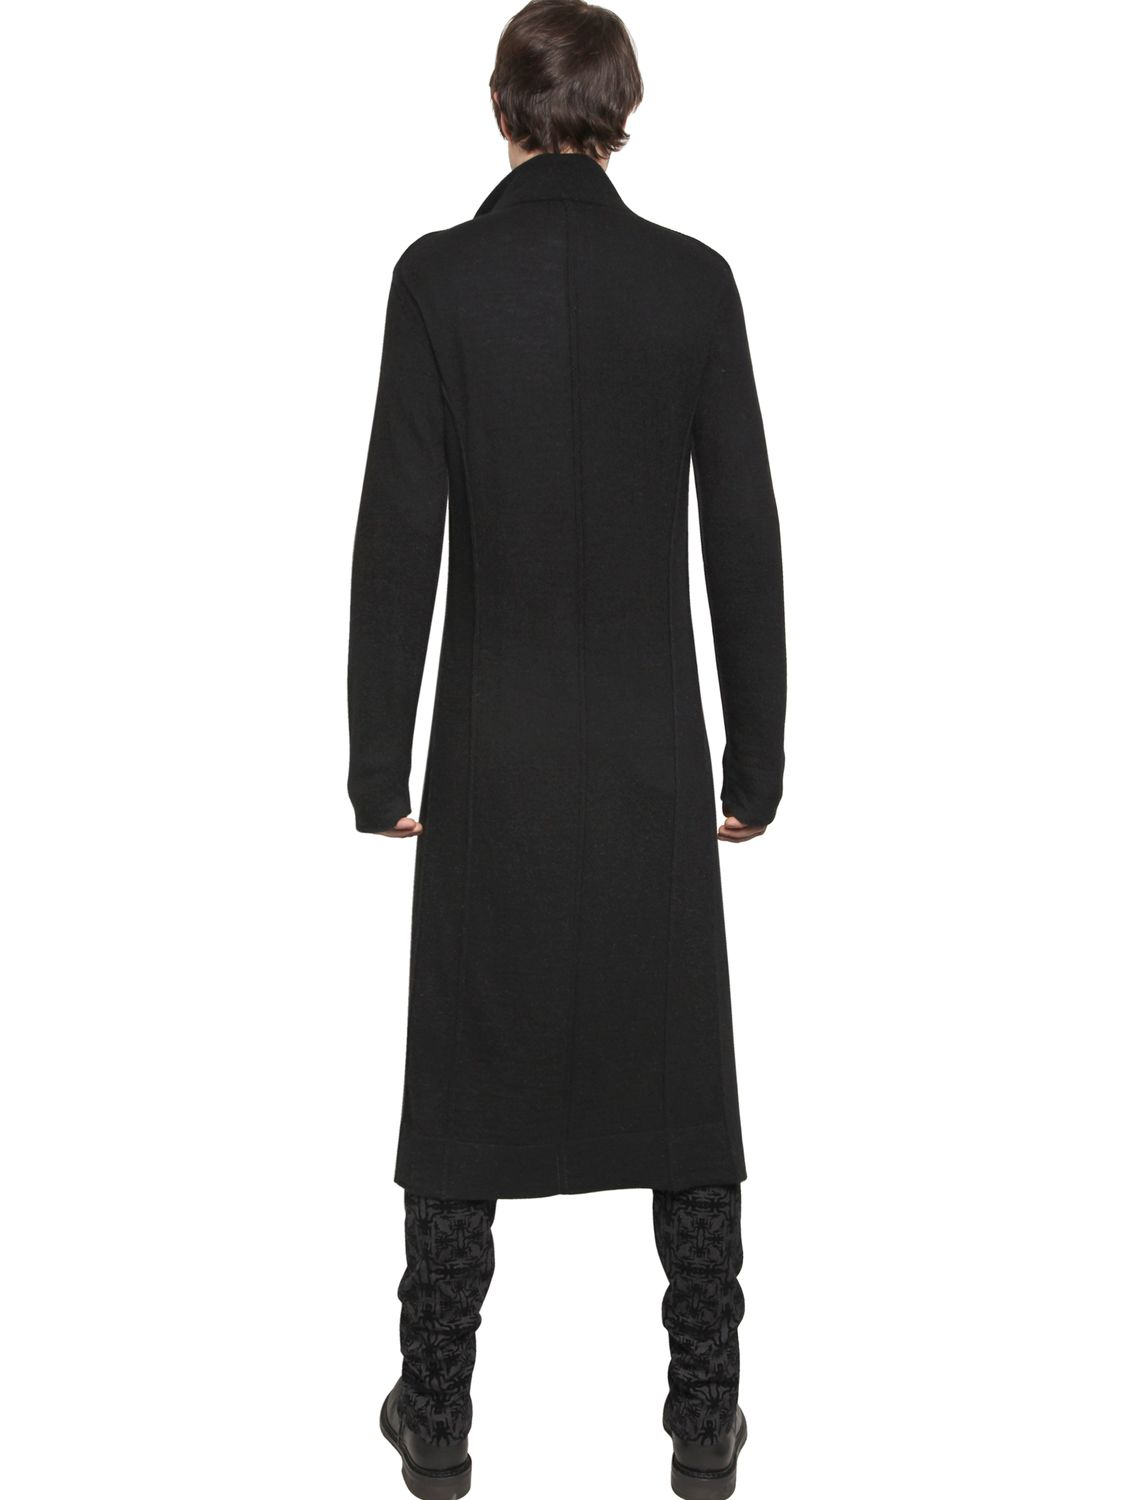 Lyst - Ann Demeulemeester Wool Angora Knit Long Cardigan in Black for Men